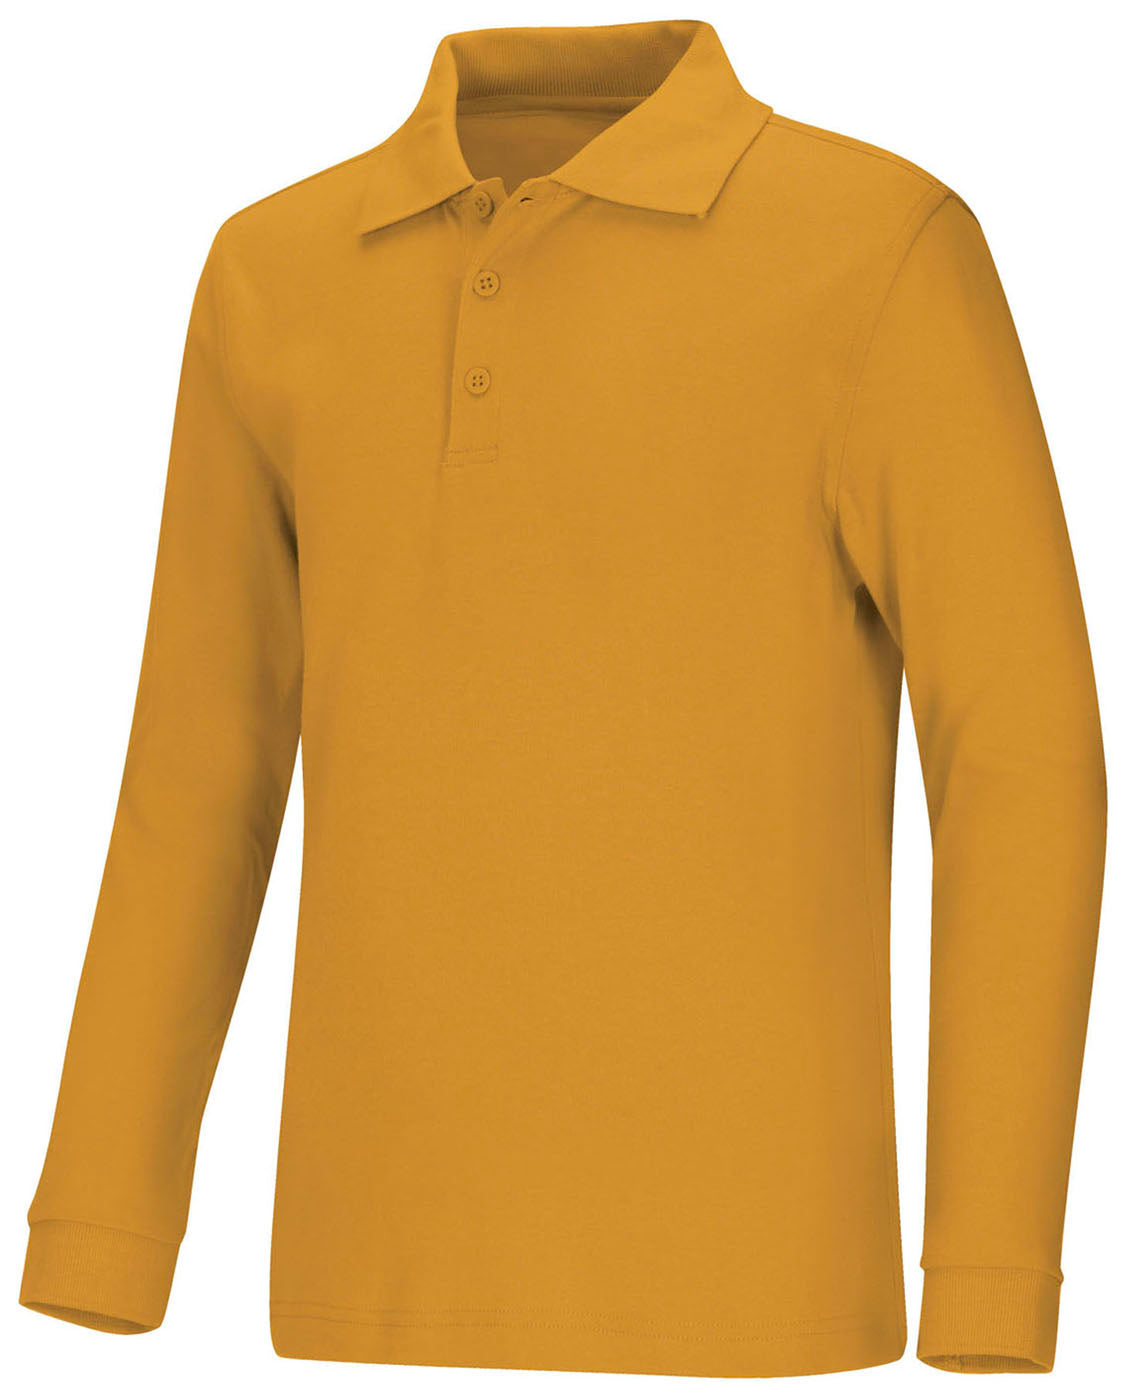 Northwest Academy 7th Grade Long Sleeve Golf Shirt